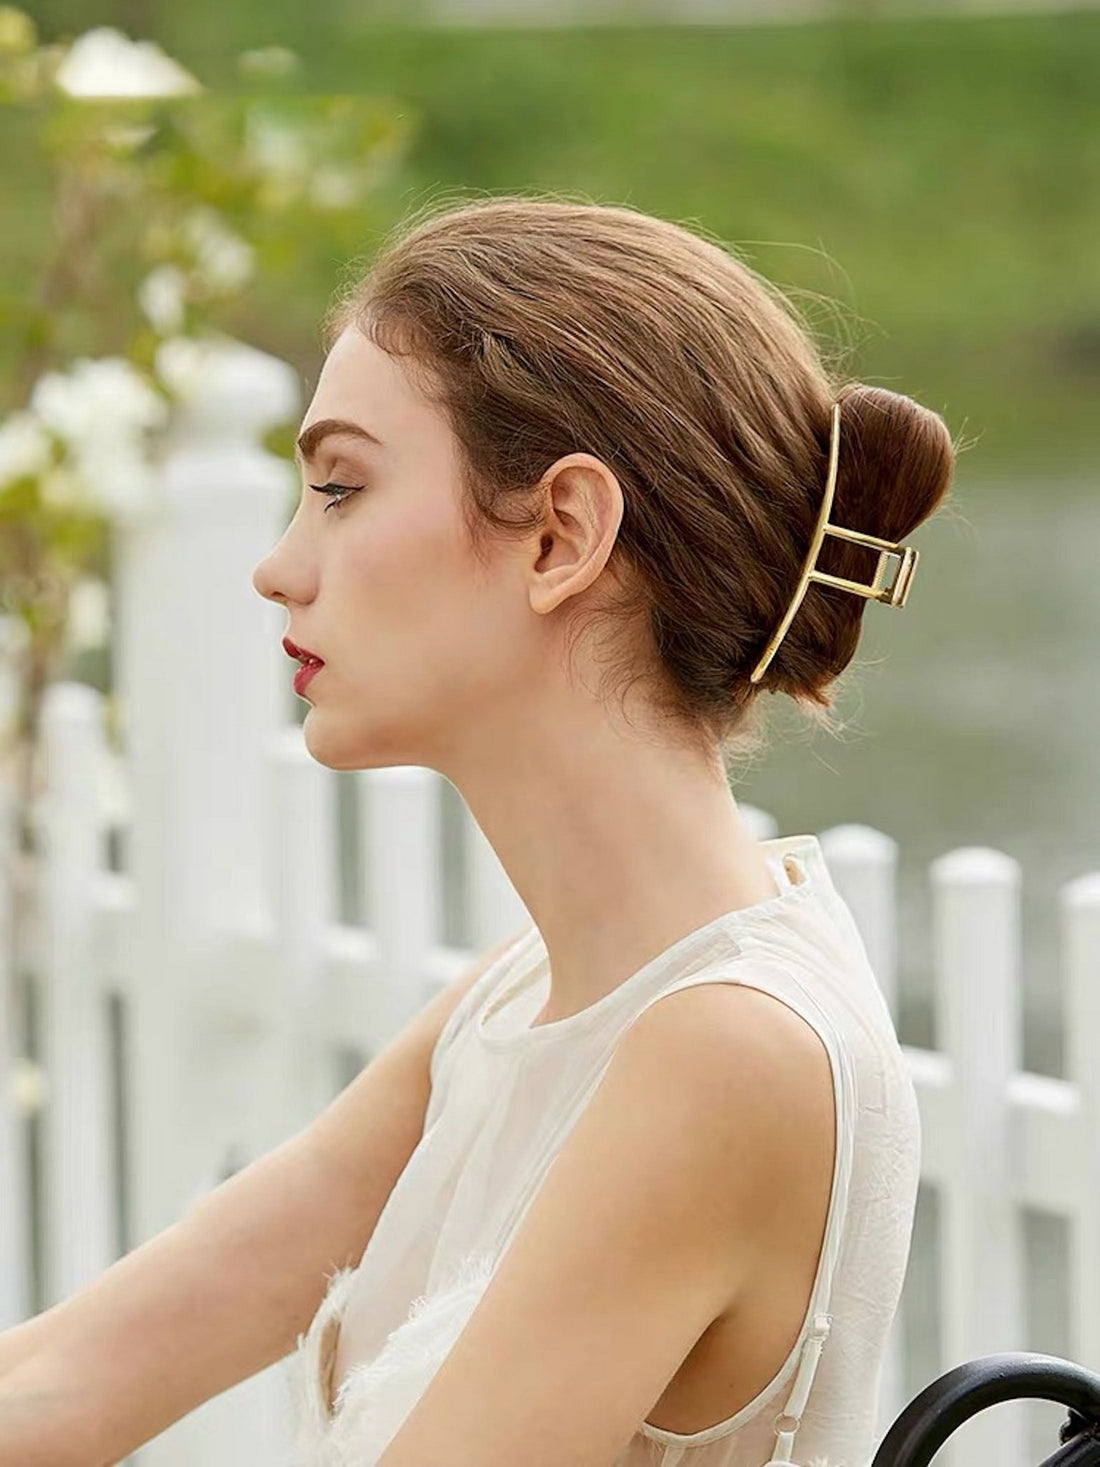 Große Krallen-Haarspangen aus Metall – Gold, minimalistische Designs – 3 Arten